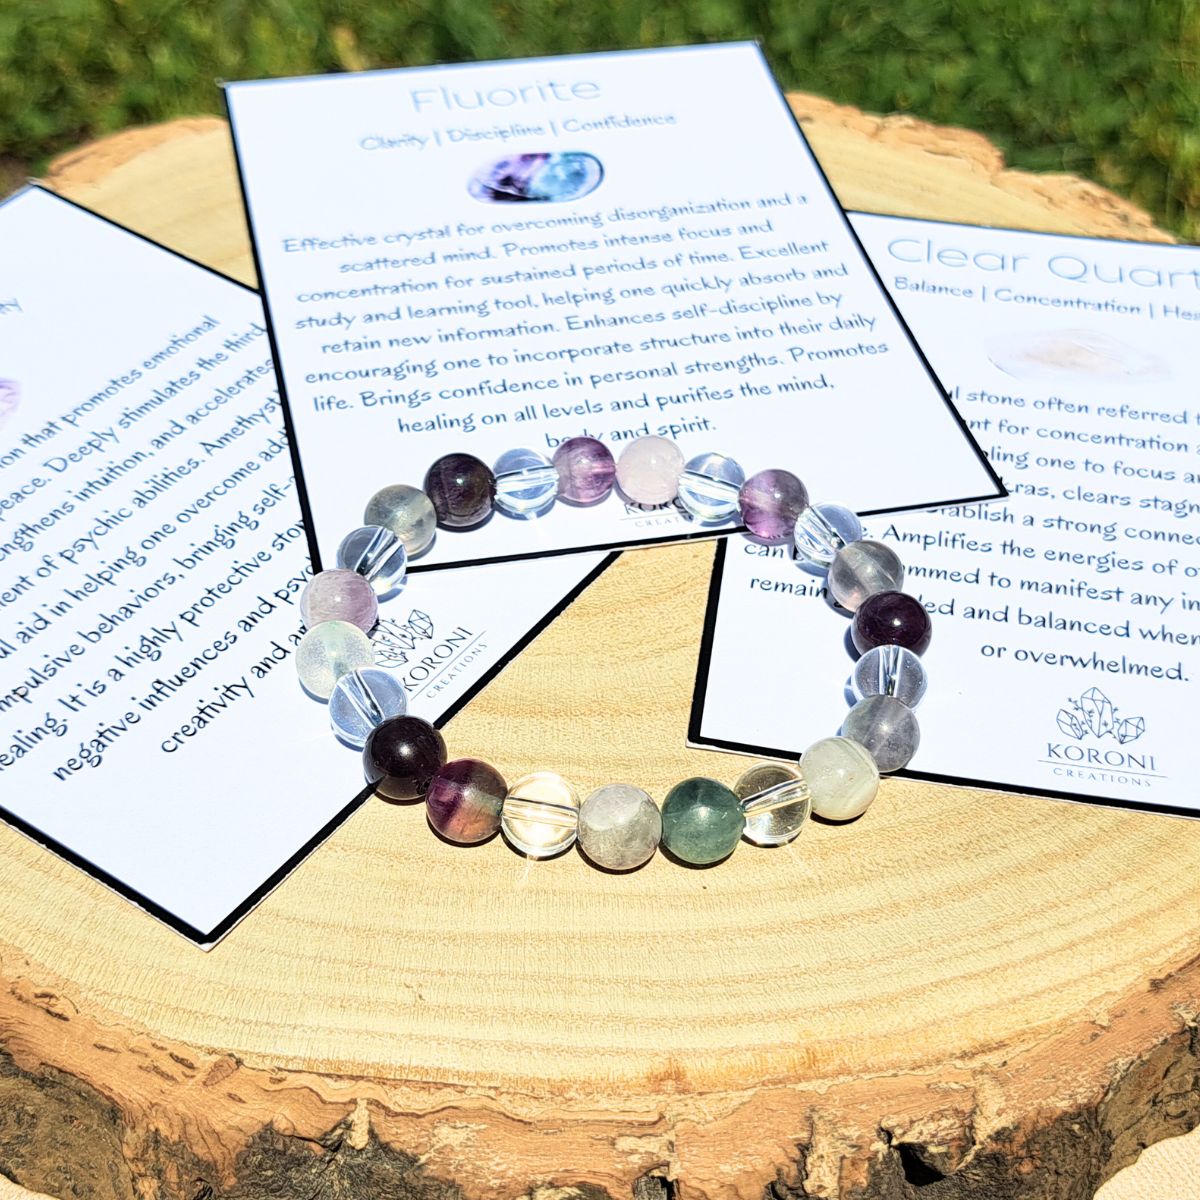 Aquarius crystals bracelet with explanation cards.